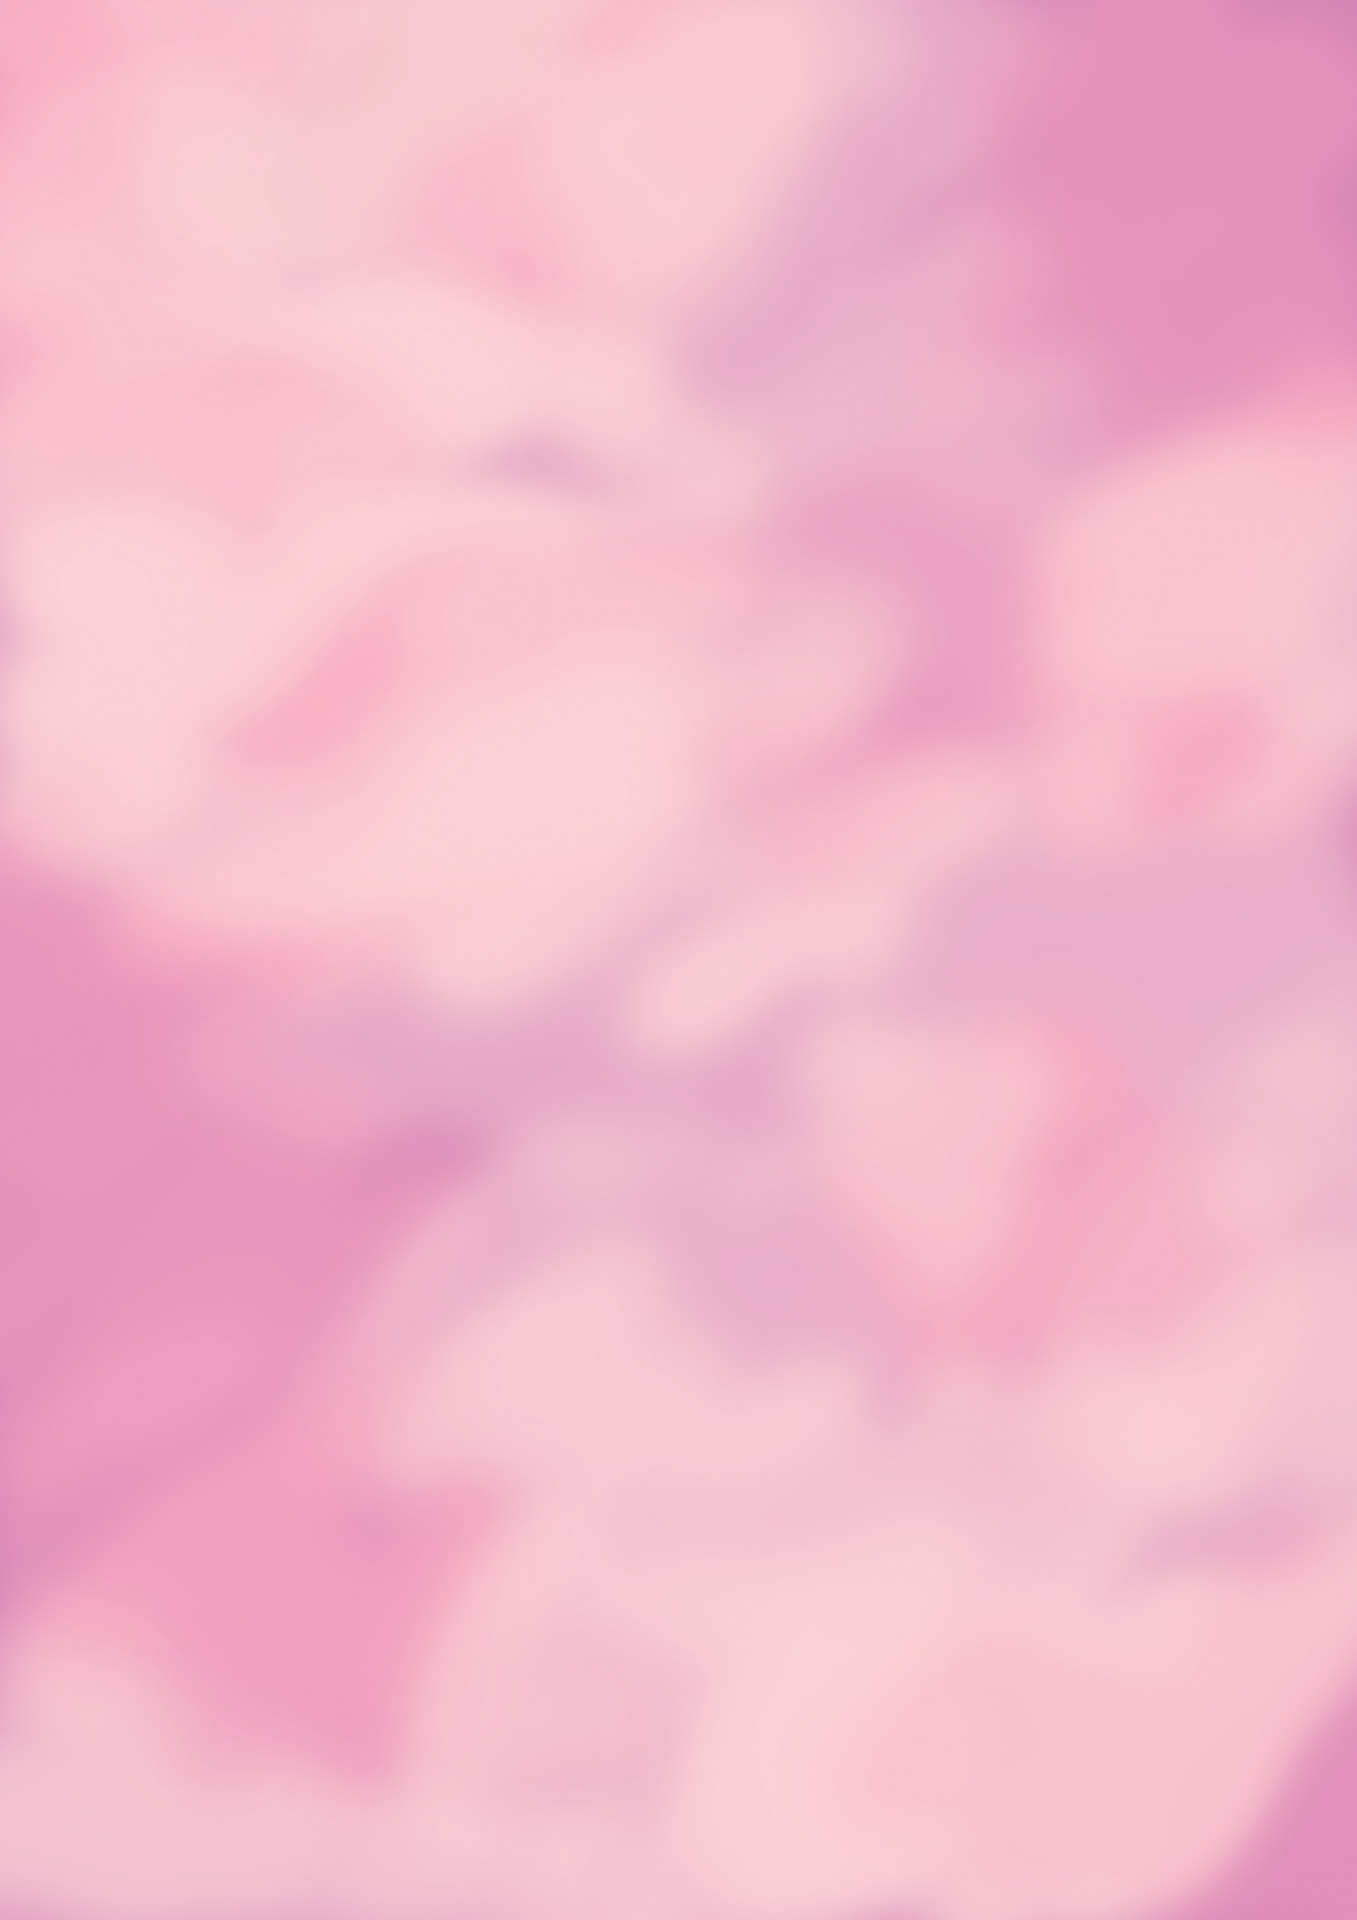 background blurred pink free photo